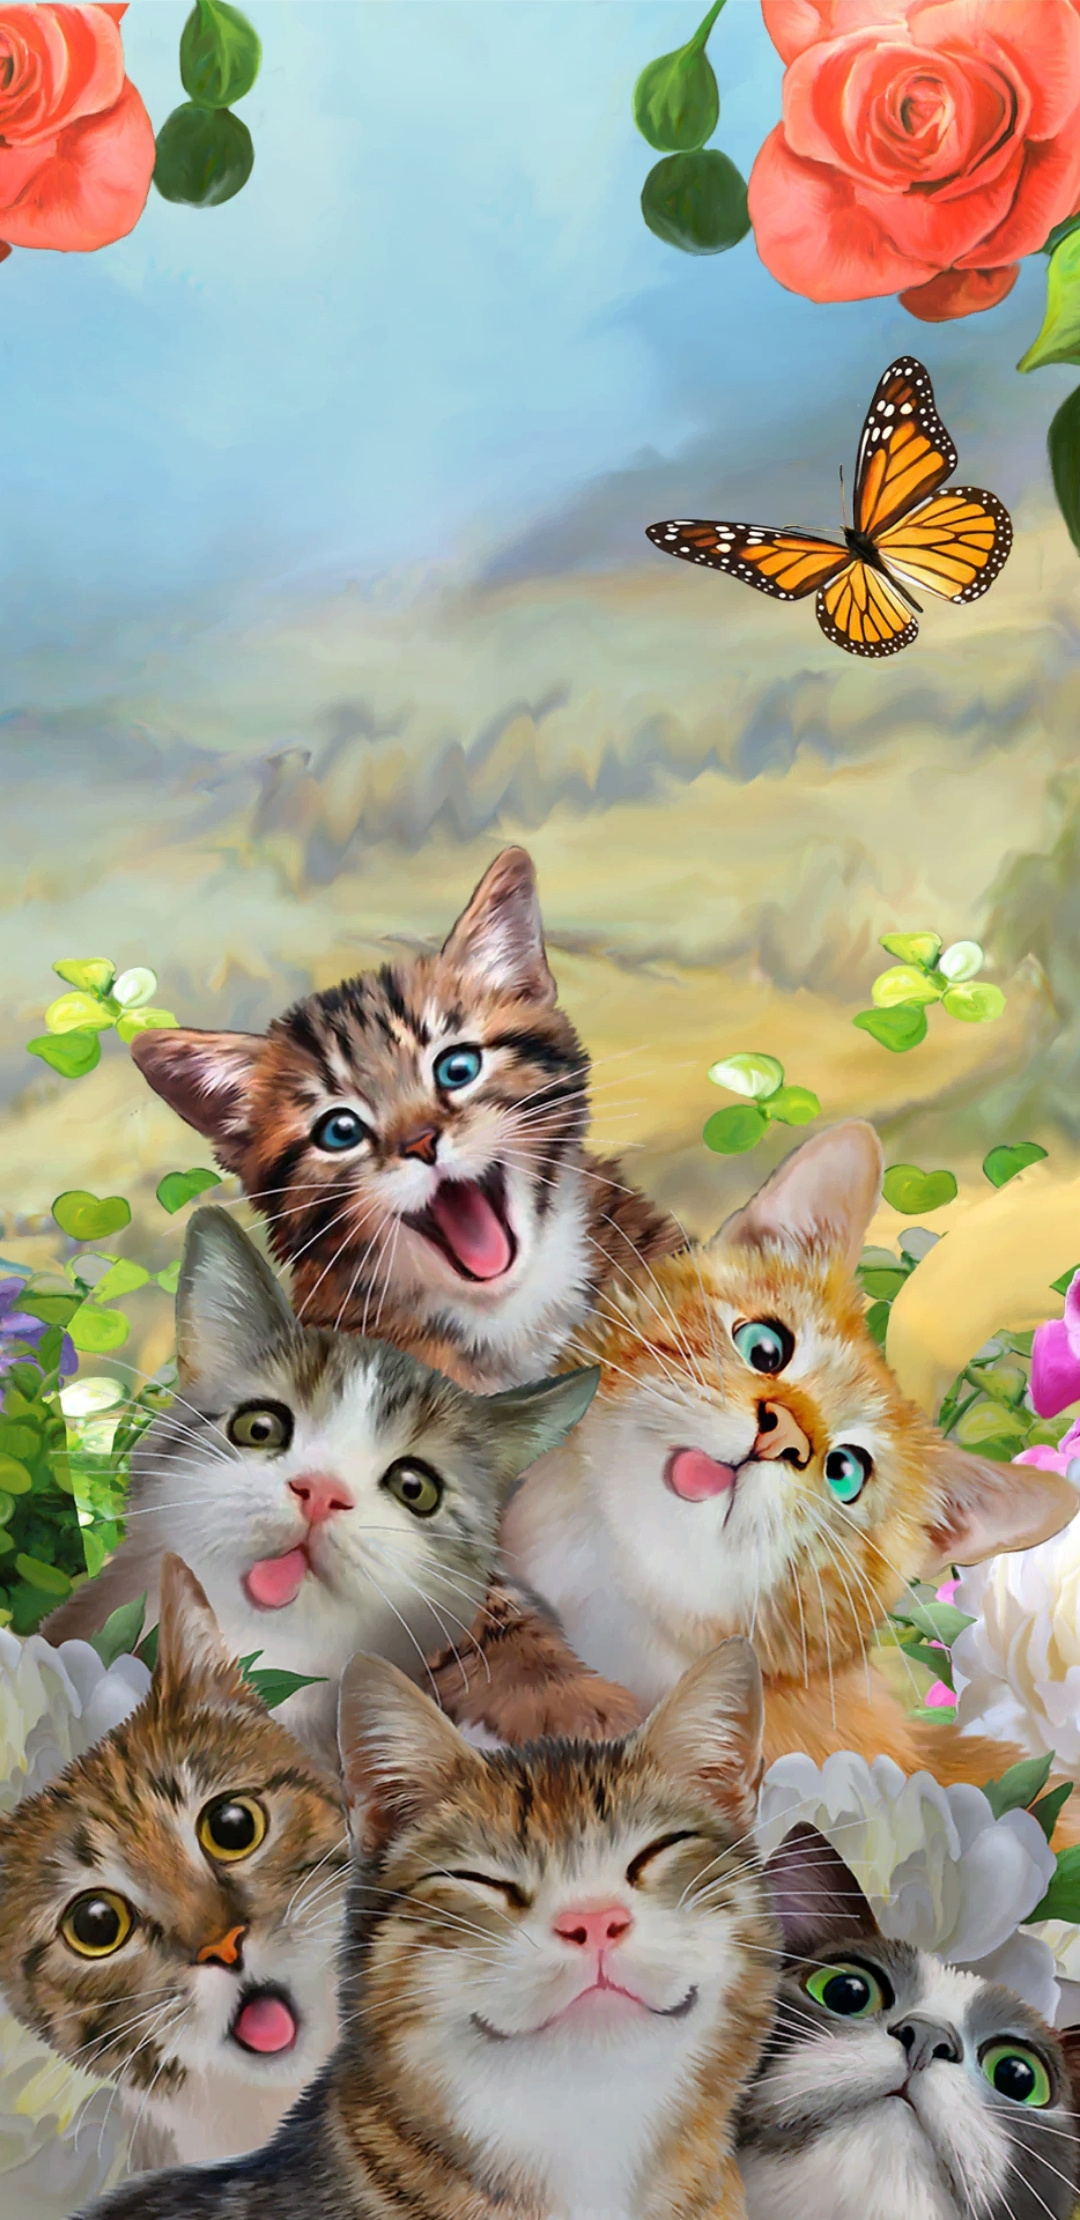 Cat iPhone Wallpaper { 4k & HD }